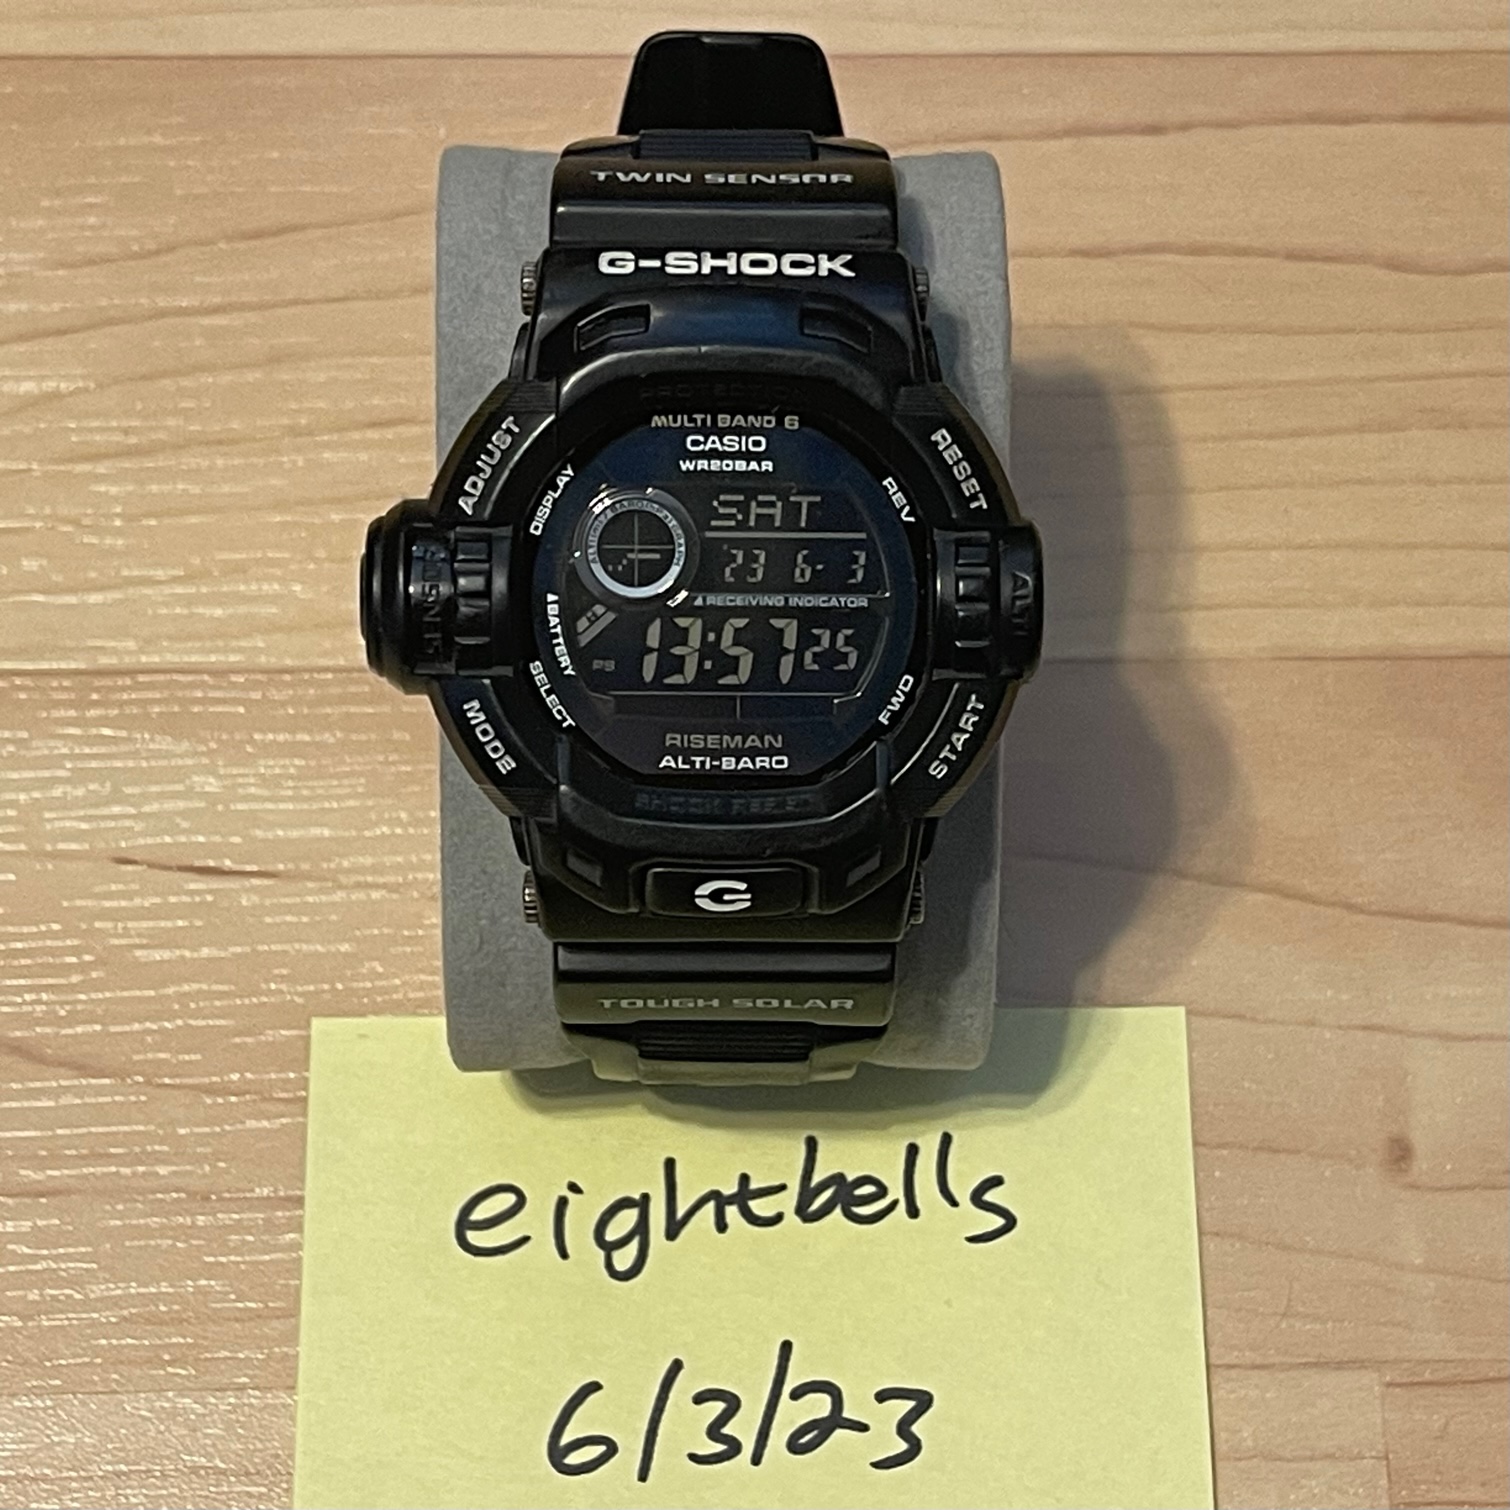 G-SHOCK ライズマンBLACK GW-9200BWJ-1JF - 腕時計(デジタル)